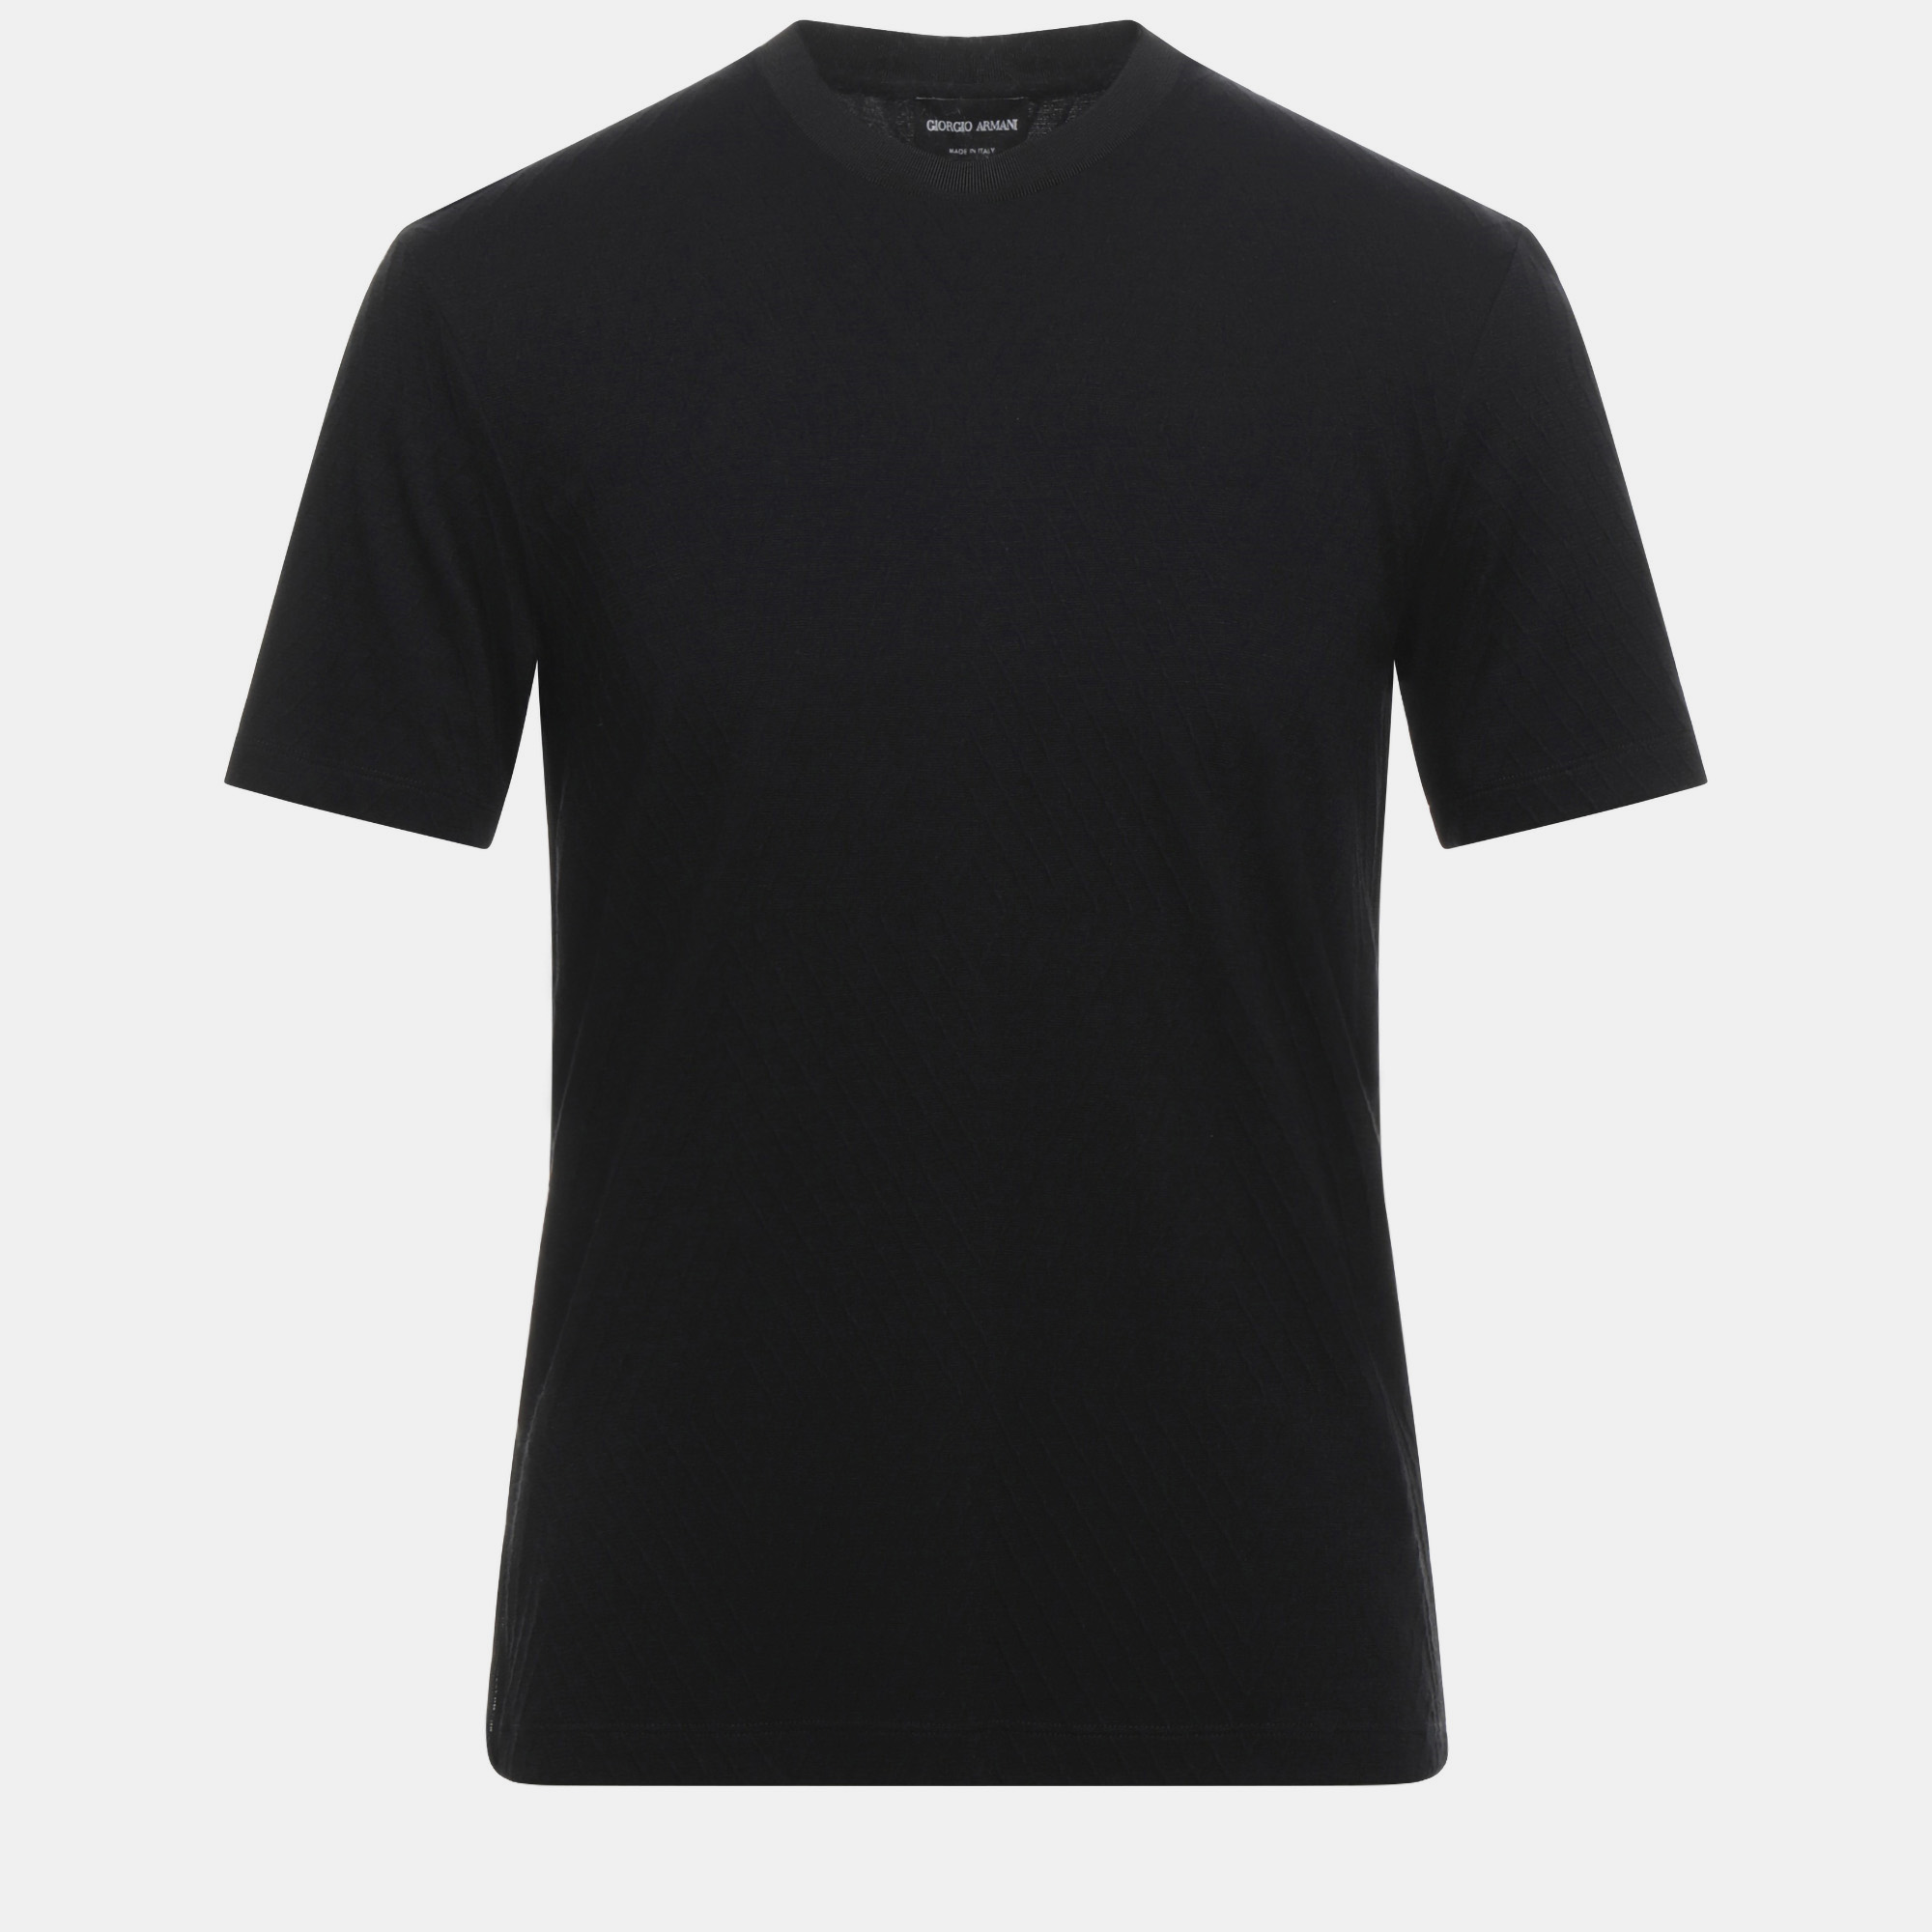 Giorgio armani black zig zag knit crew neck t-shirt 4xl (it 60)